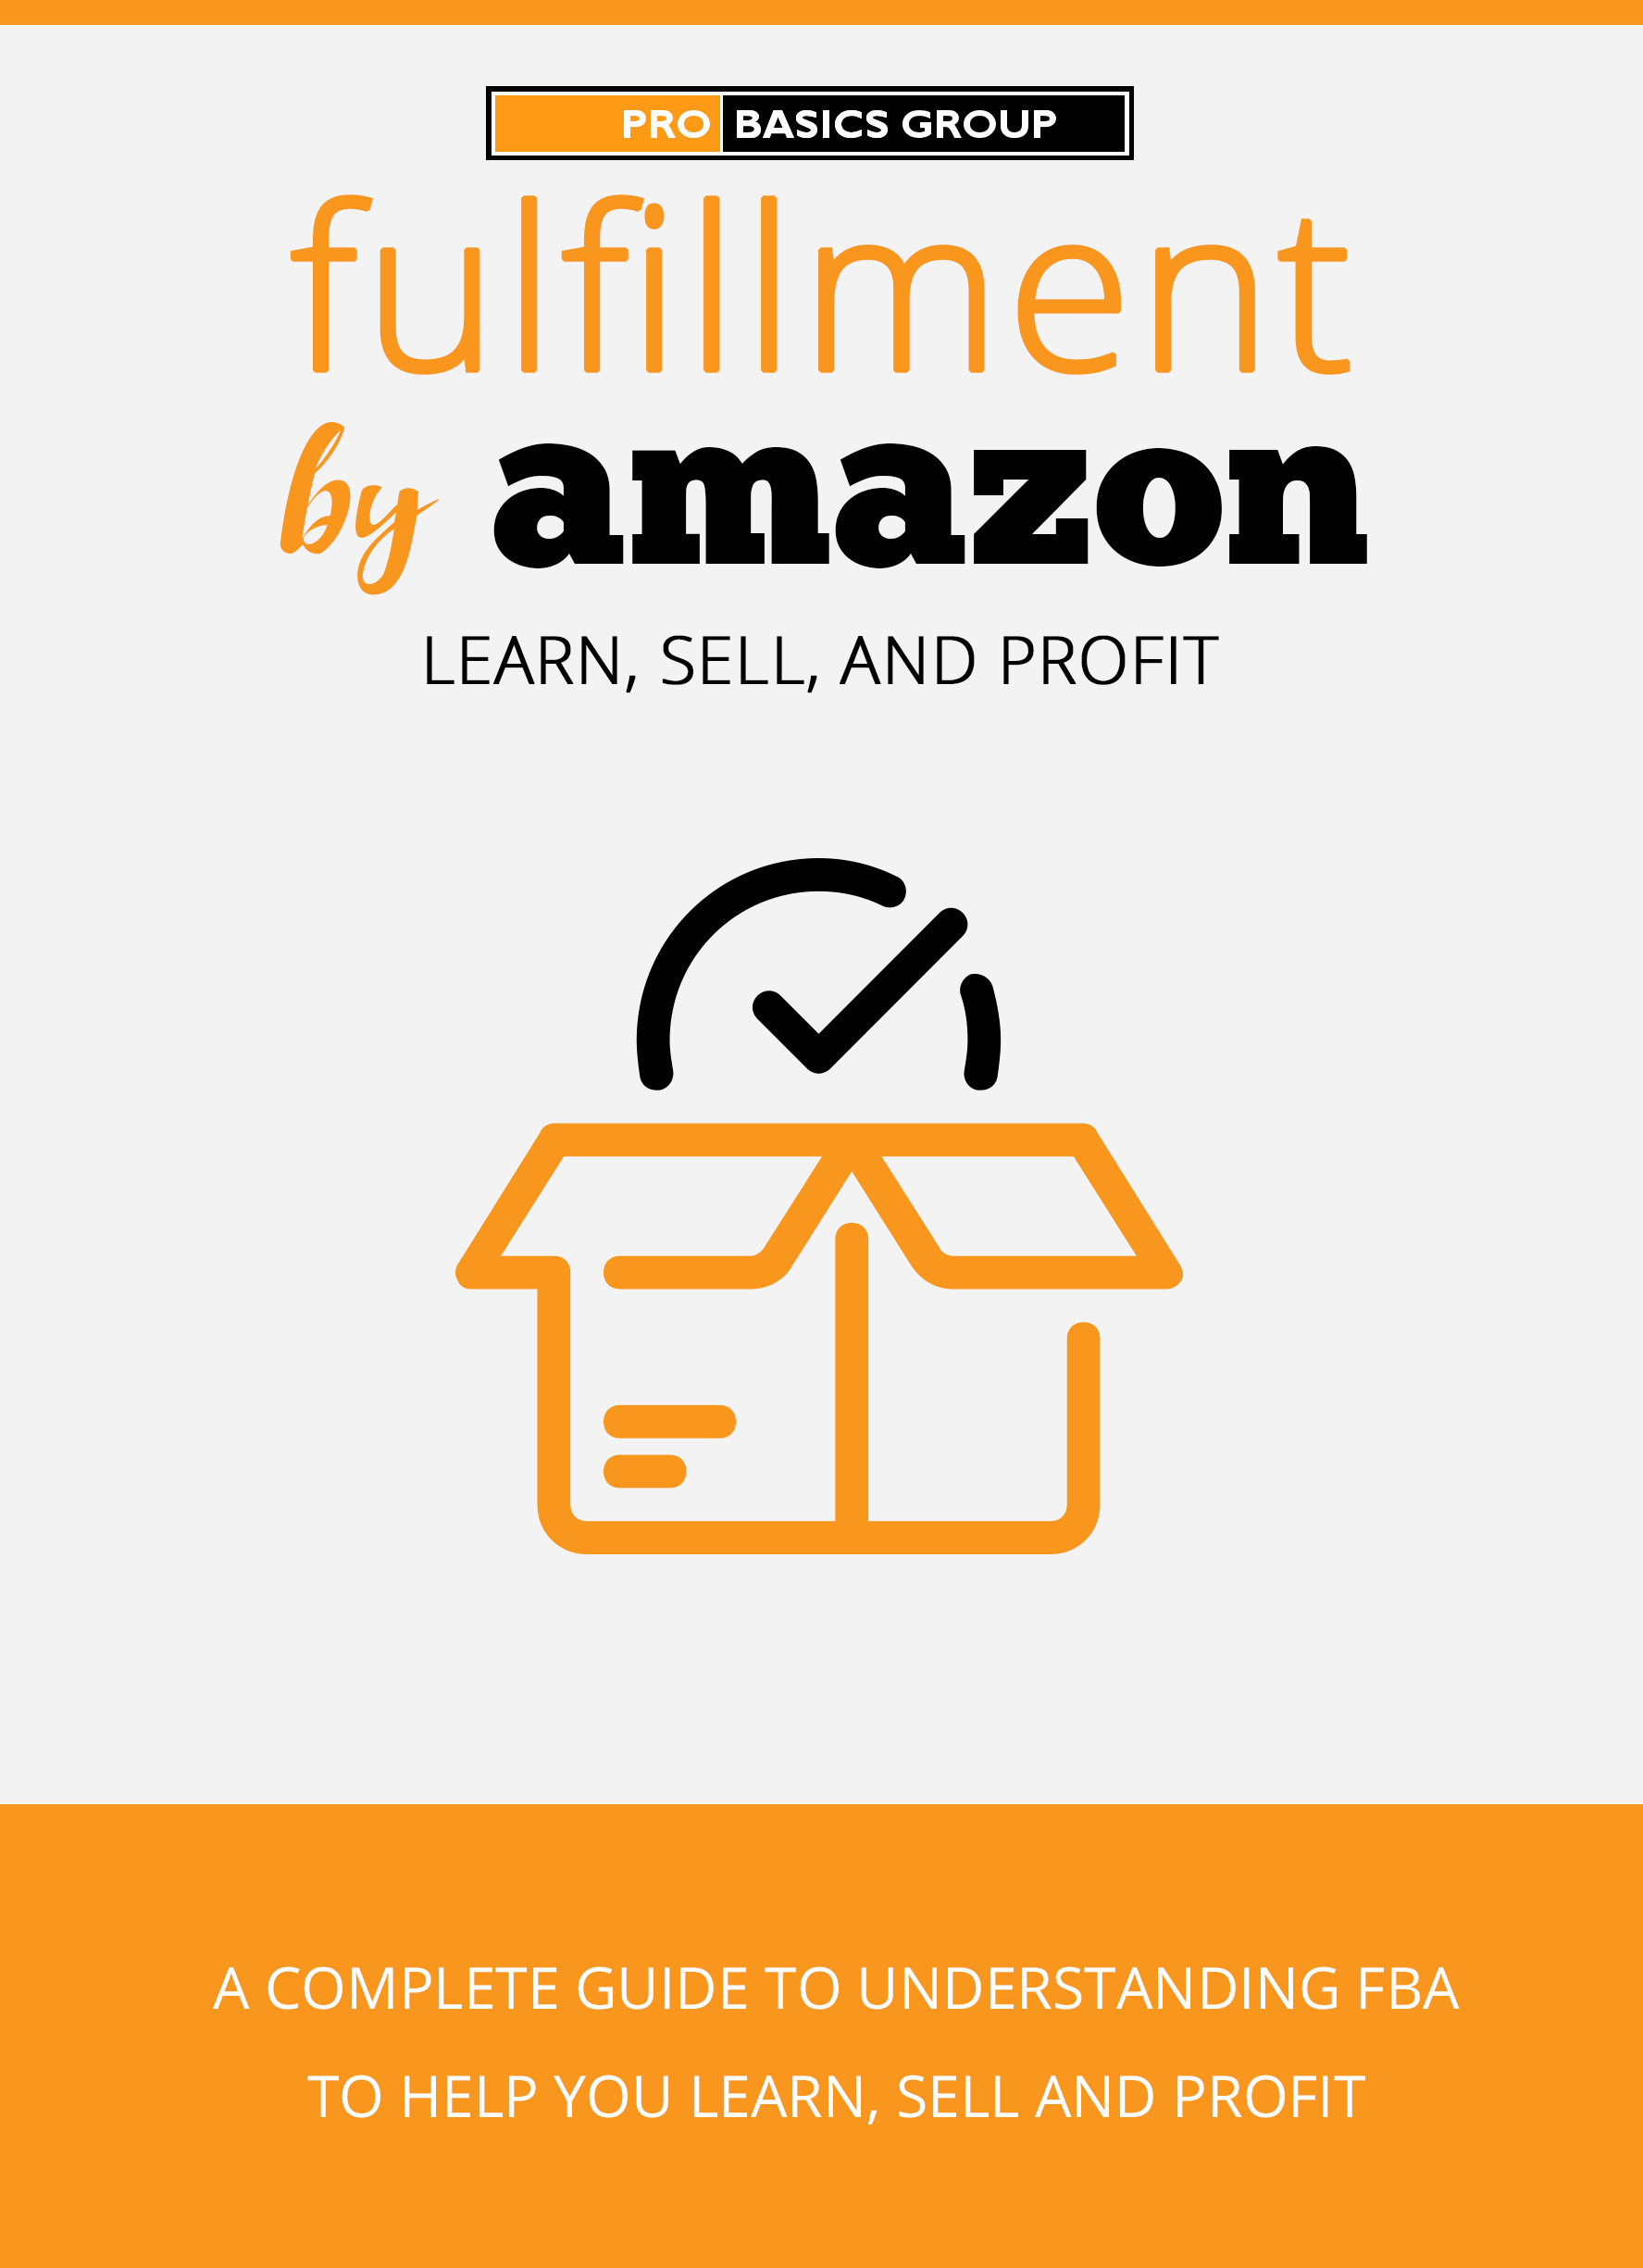 Amazon FBA - Pro Basics Group